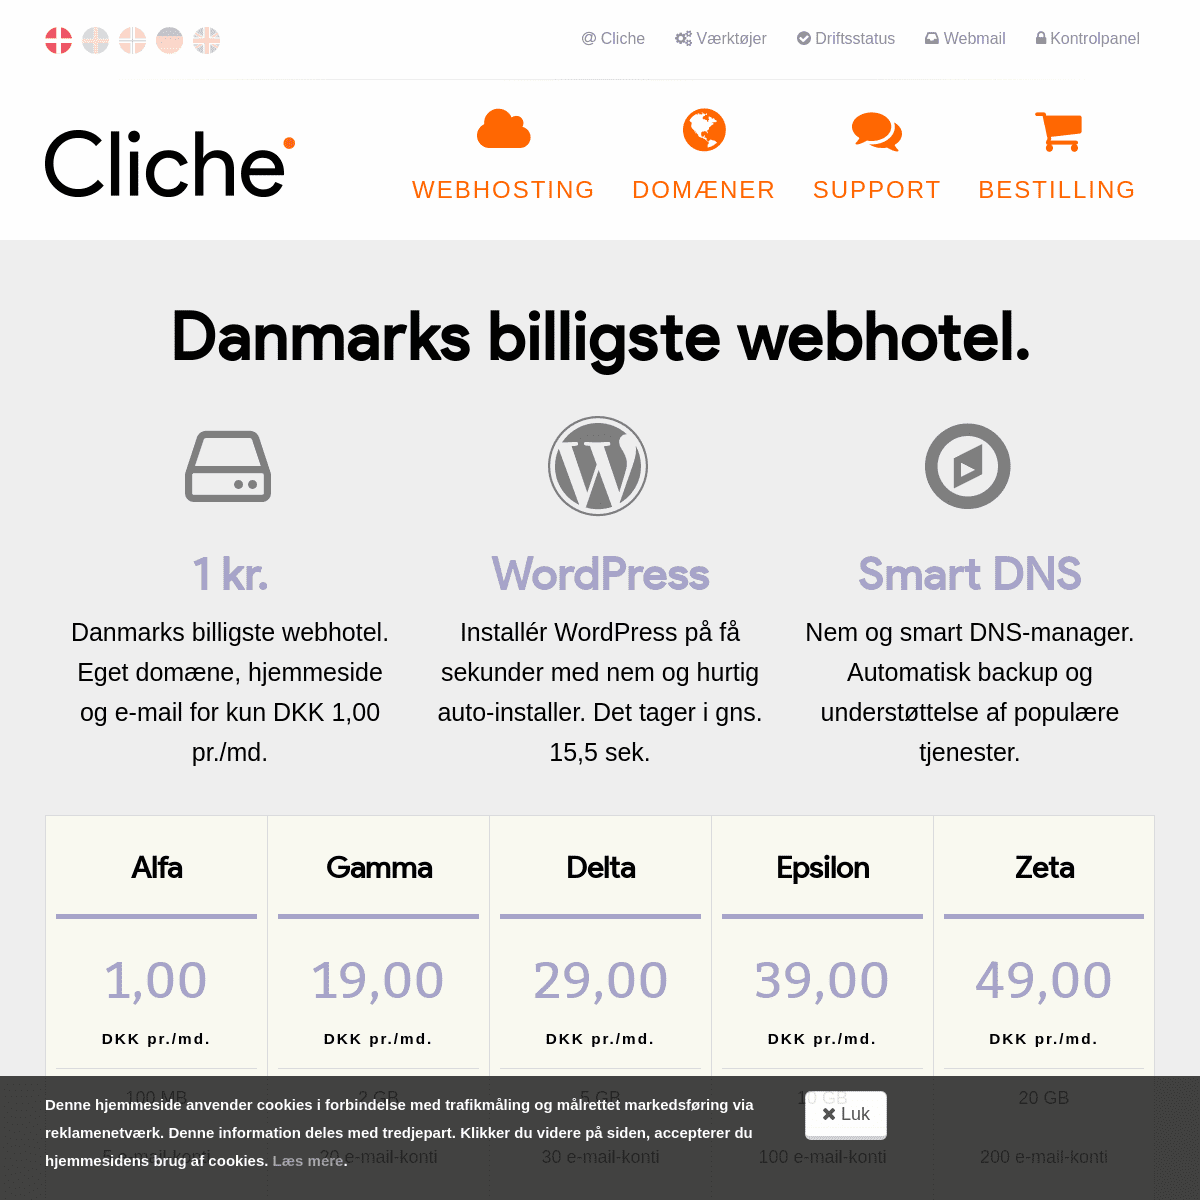 Cliche Denmark